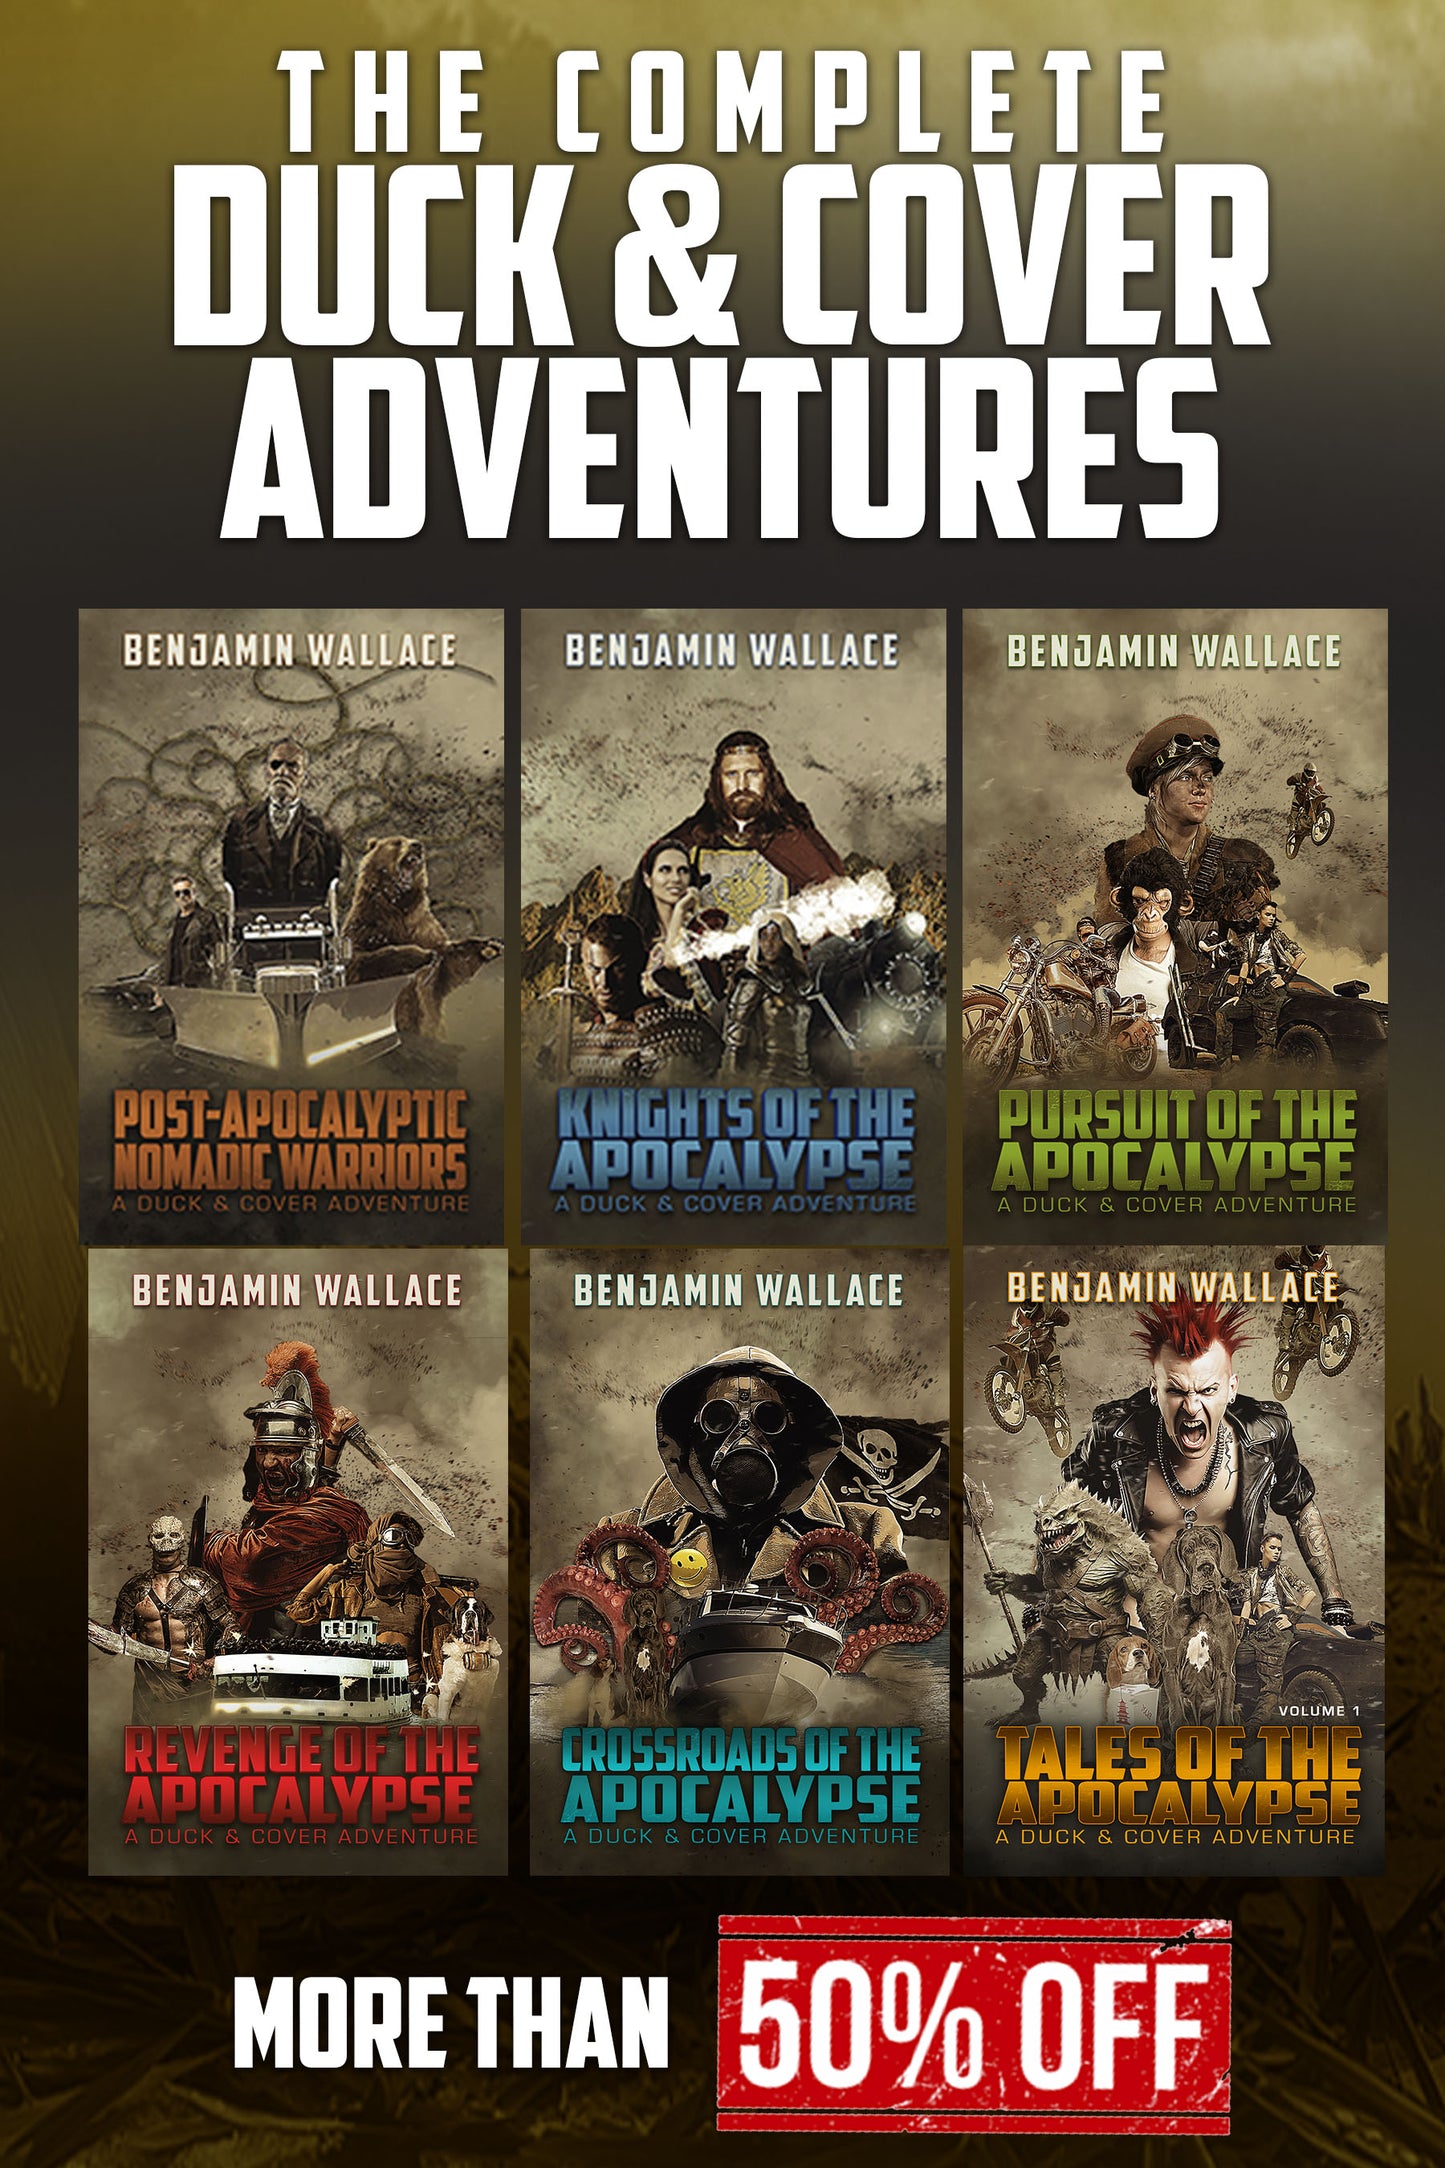 The Complete Duck & Cover Adventures E-books